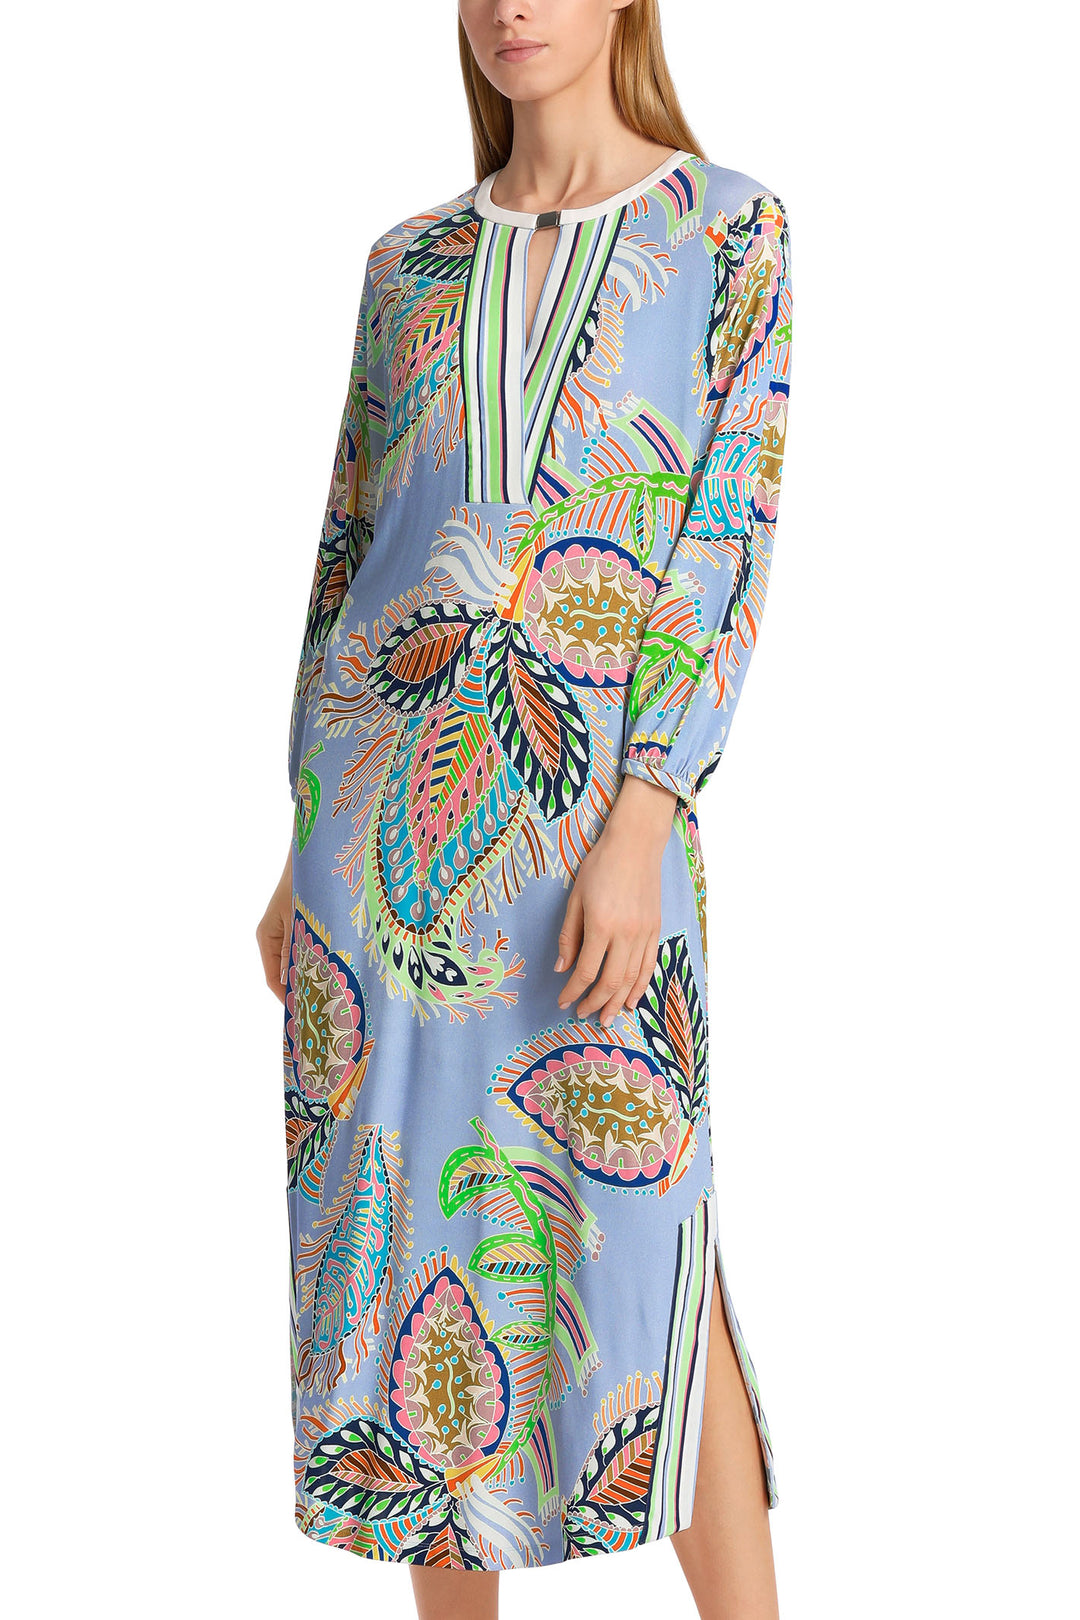 Marc Cain Collections WC 21.45 J46 321 Blue Deep Summer Sky Dress - Olivia Grace Fashion